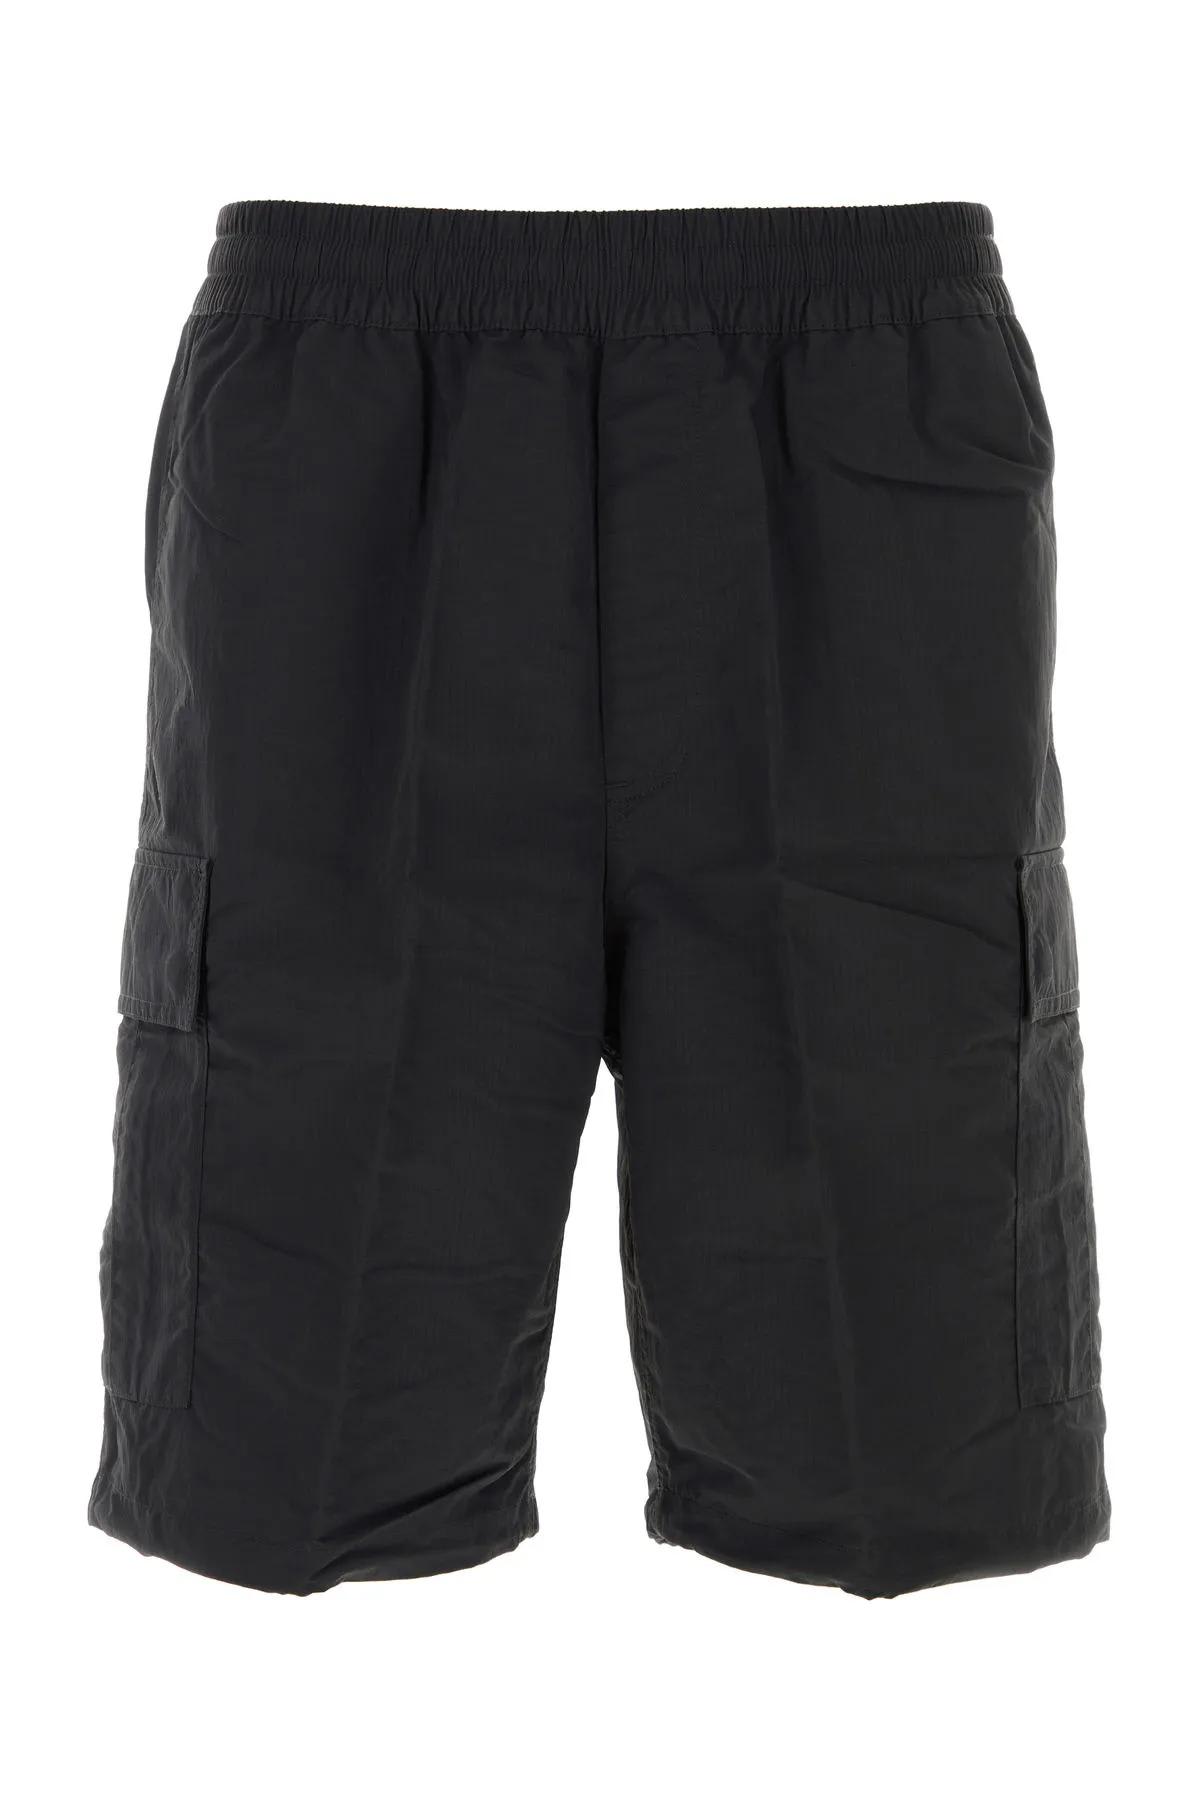 Shop Carhartt Black Nylon Evers Cargo Shorts